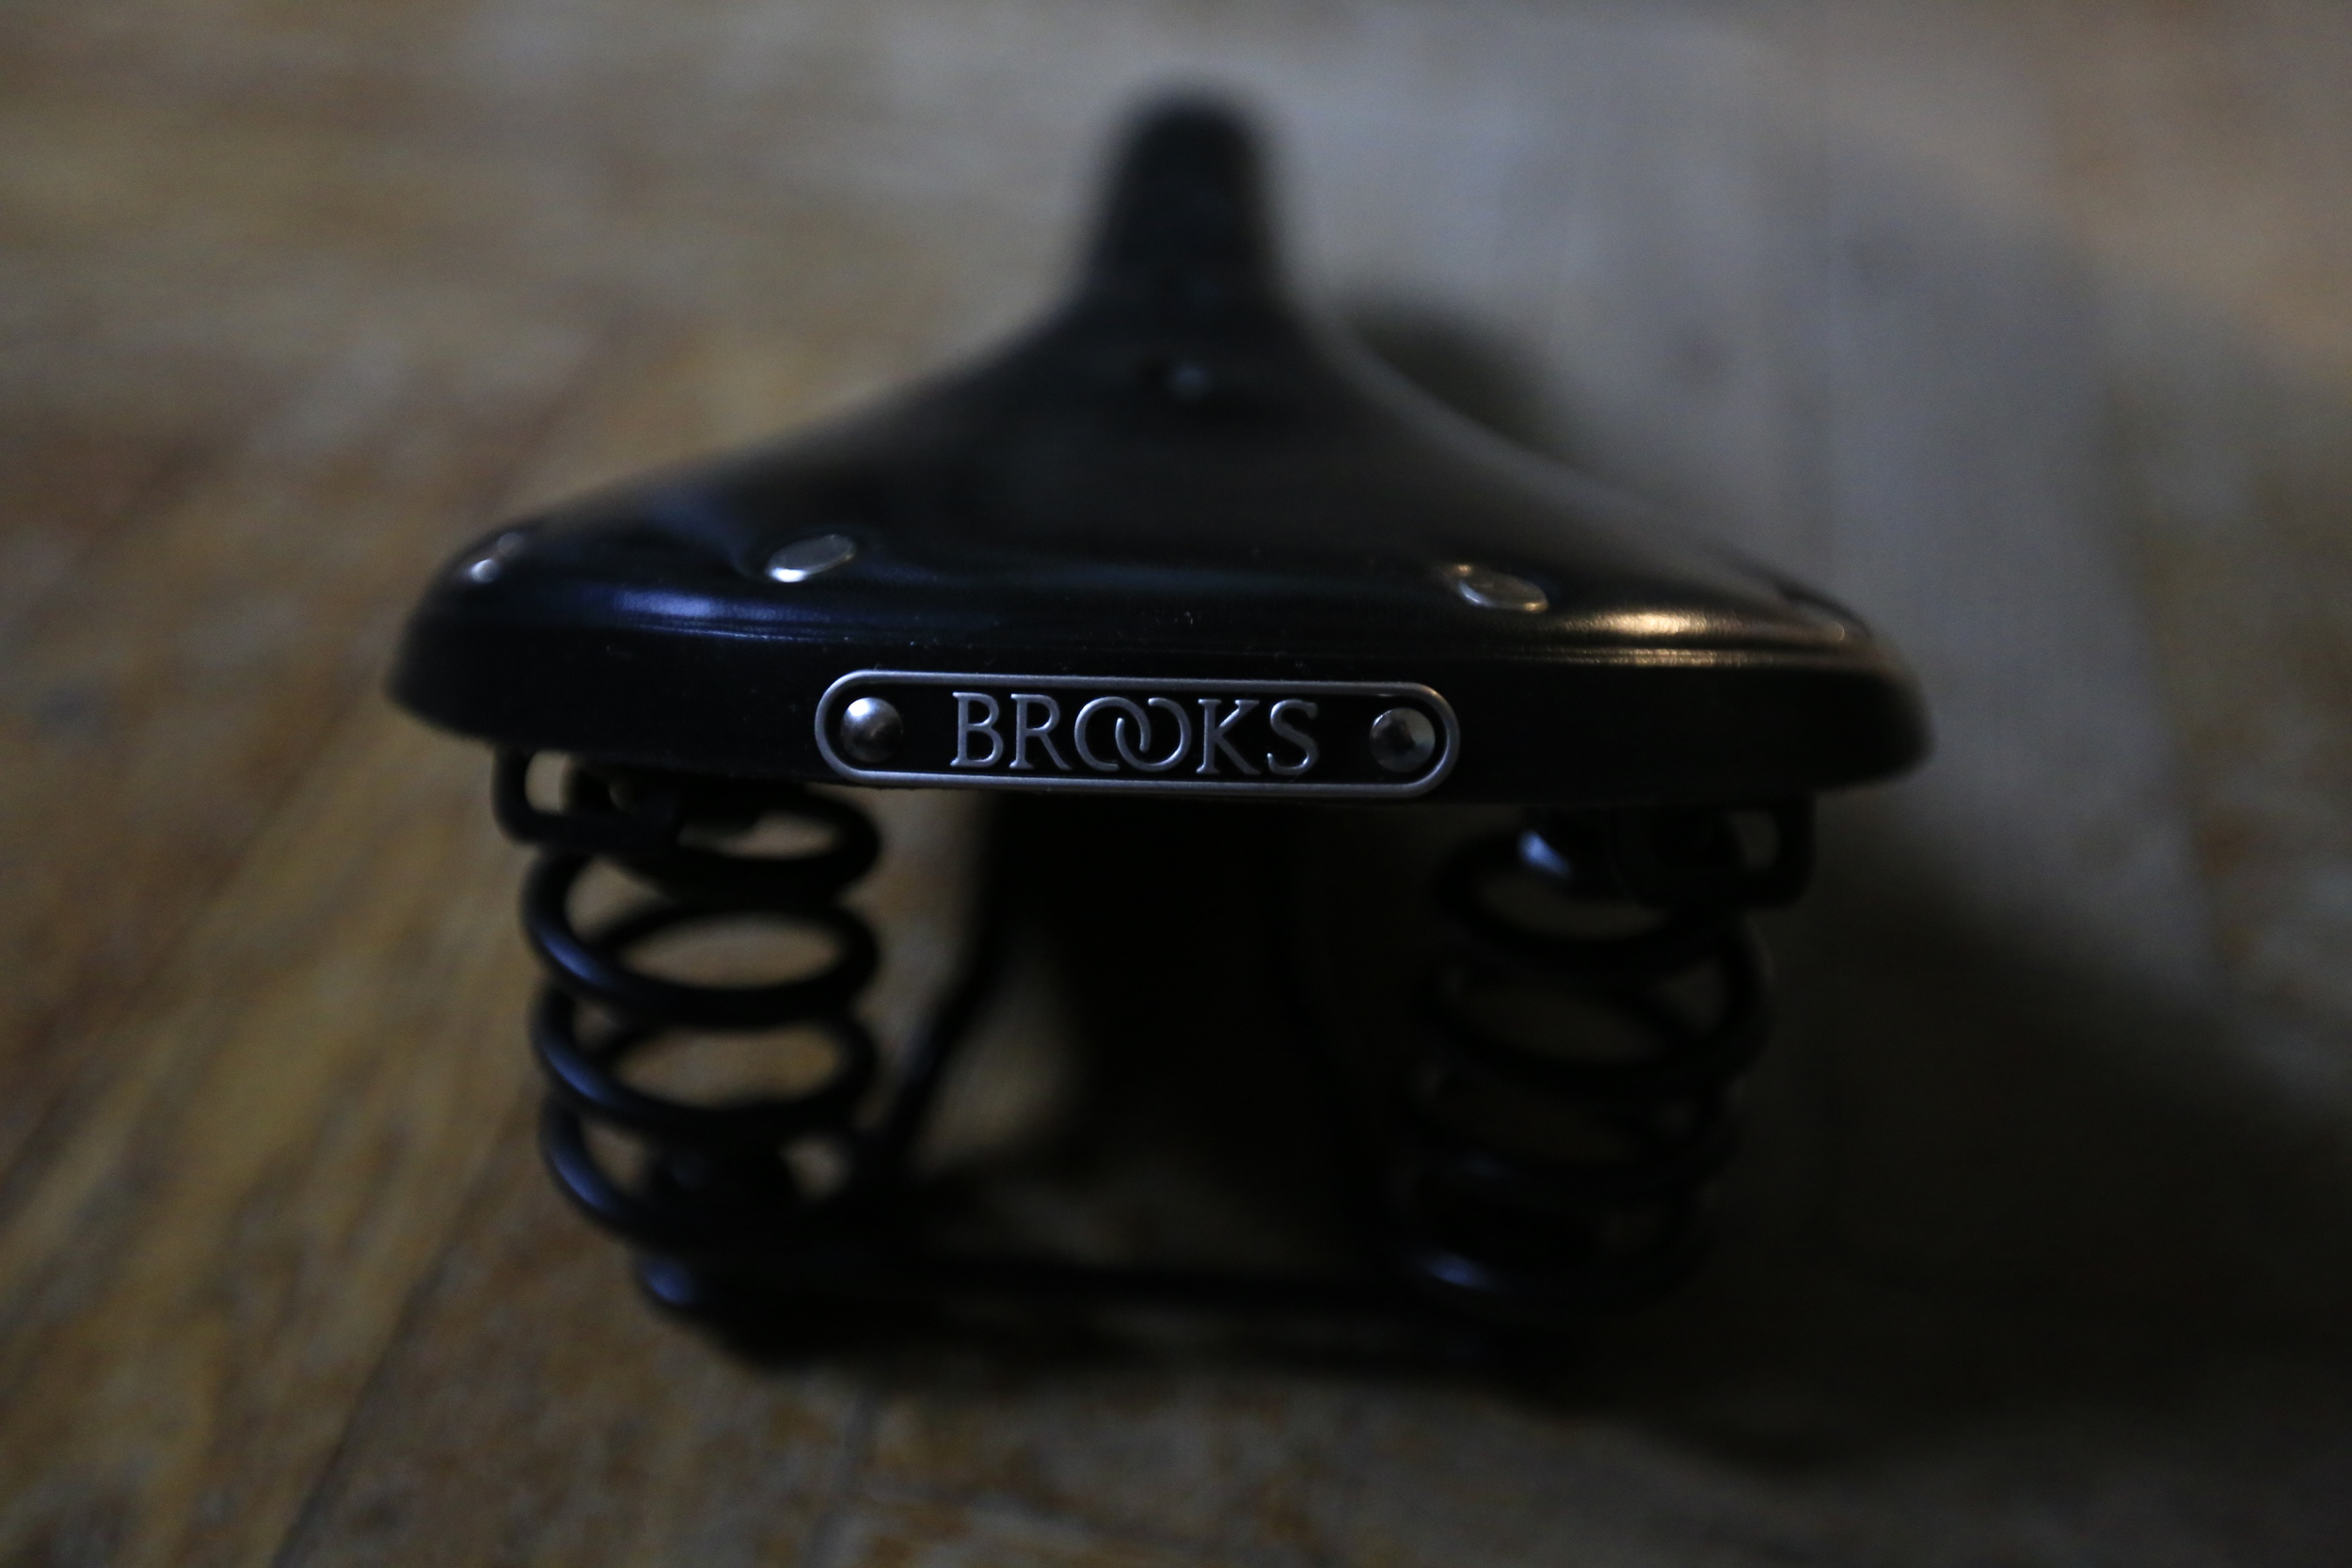 Brooks, brooks england, brooks flyer, brooks b17, cycling gear, photography, photo, canon, canon 6d